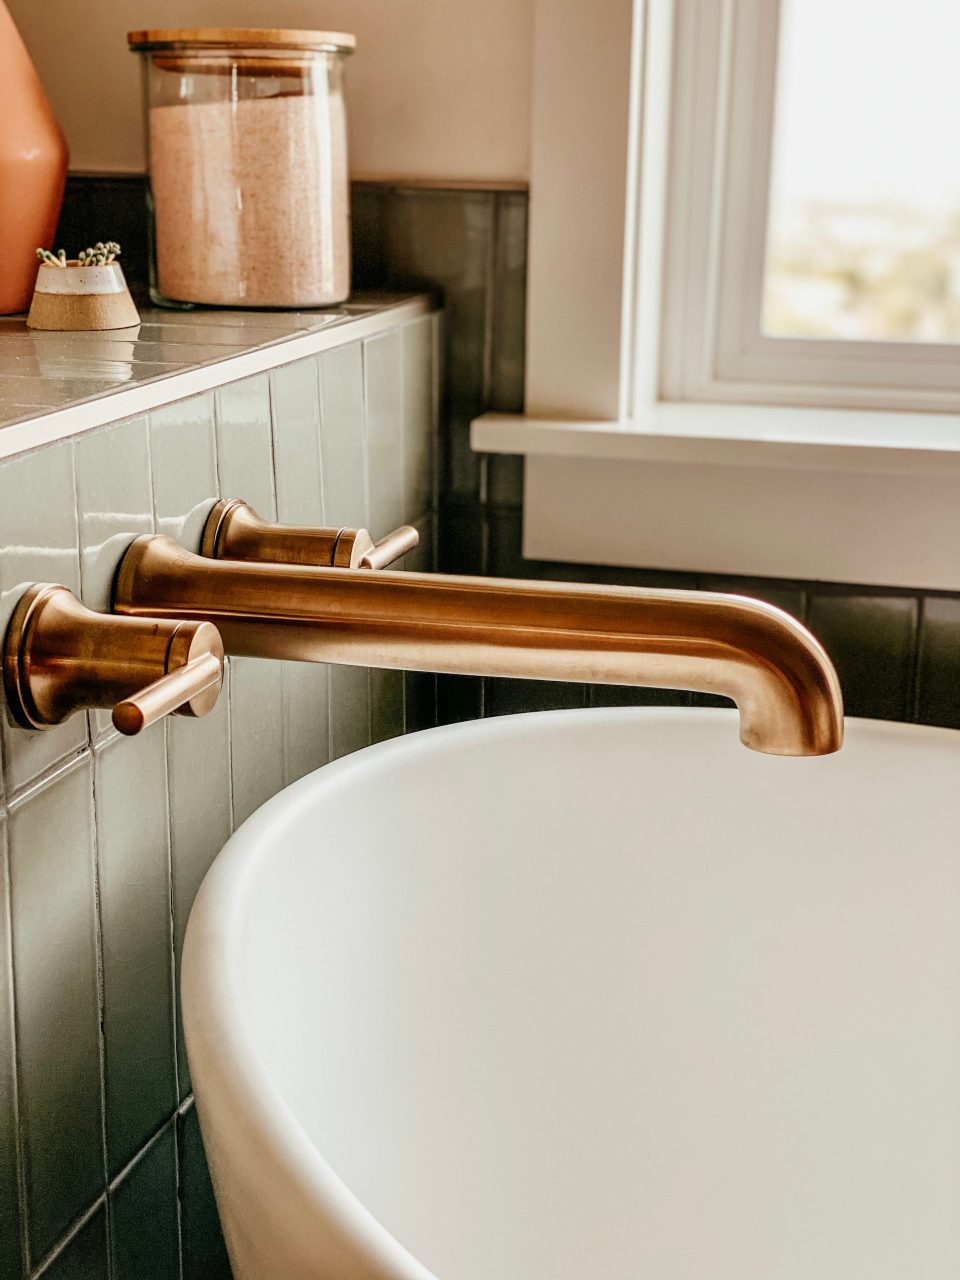 The sleek form of Delta's Trinsic bathtub faucet